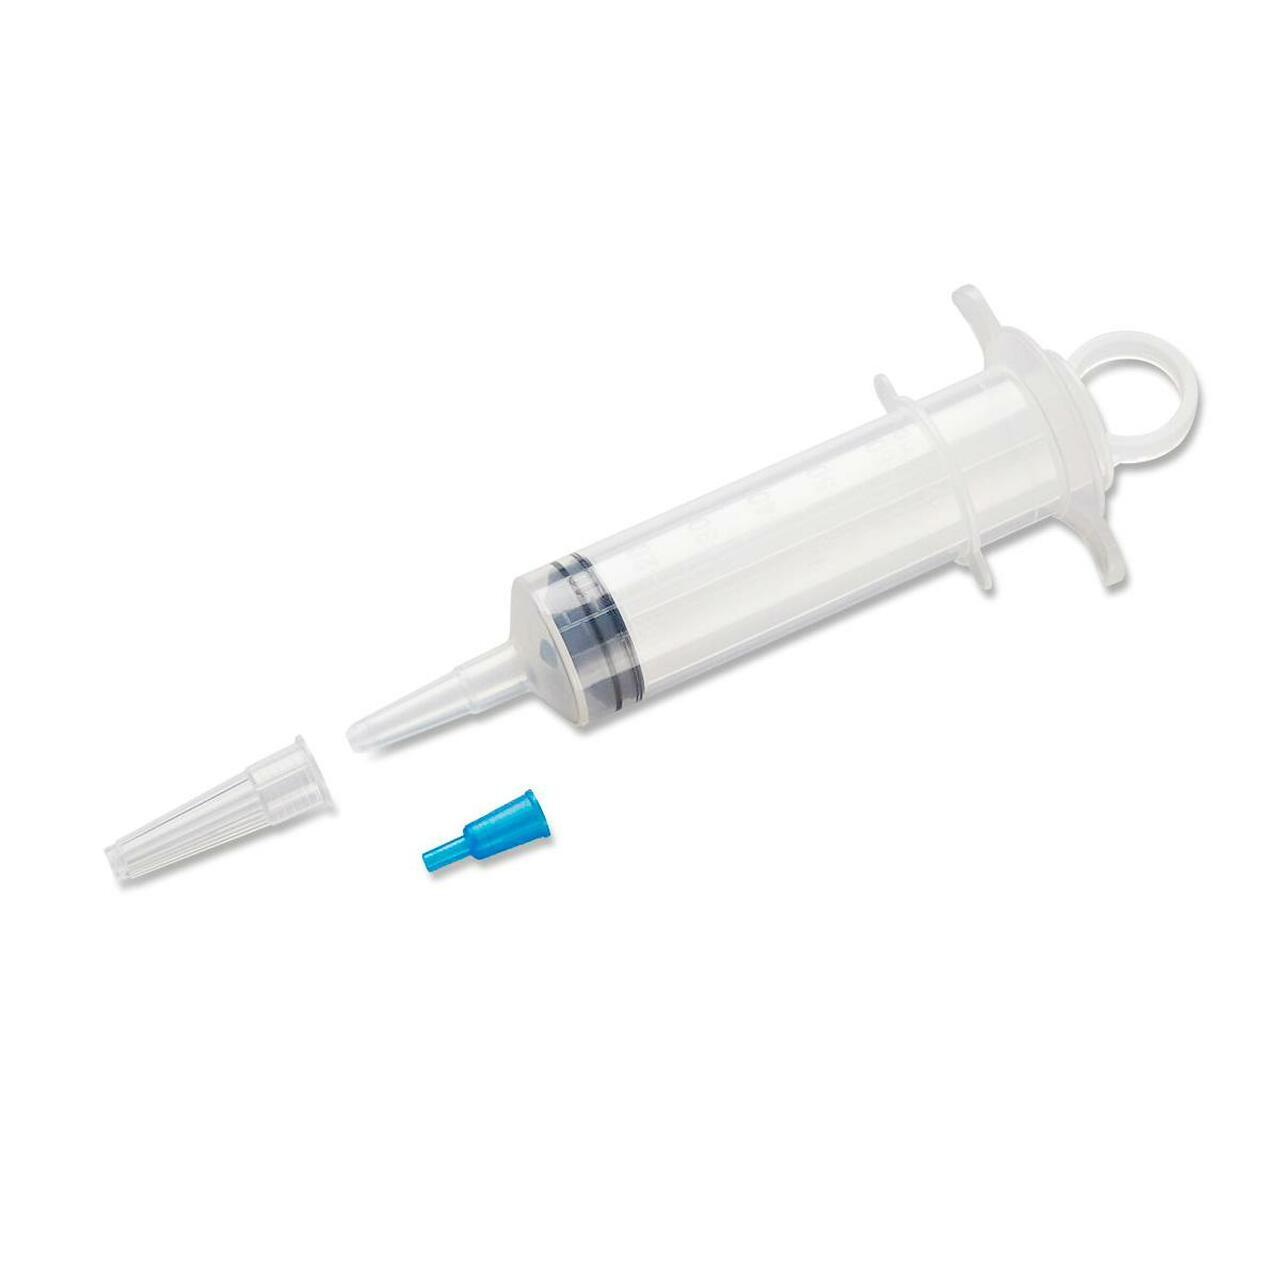 Medline Control-piston Irrigation Syringe, 60ml